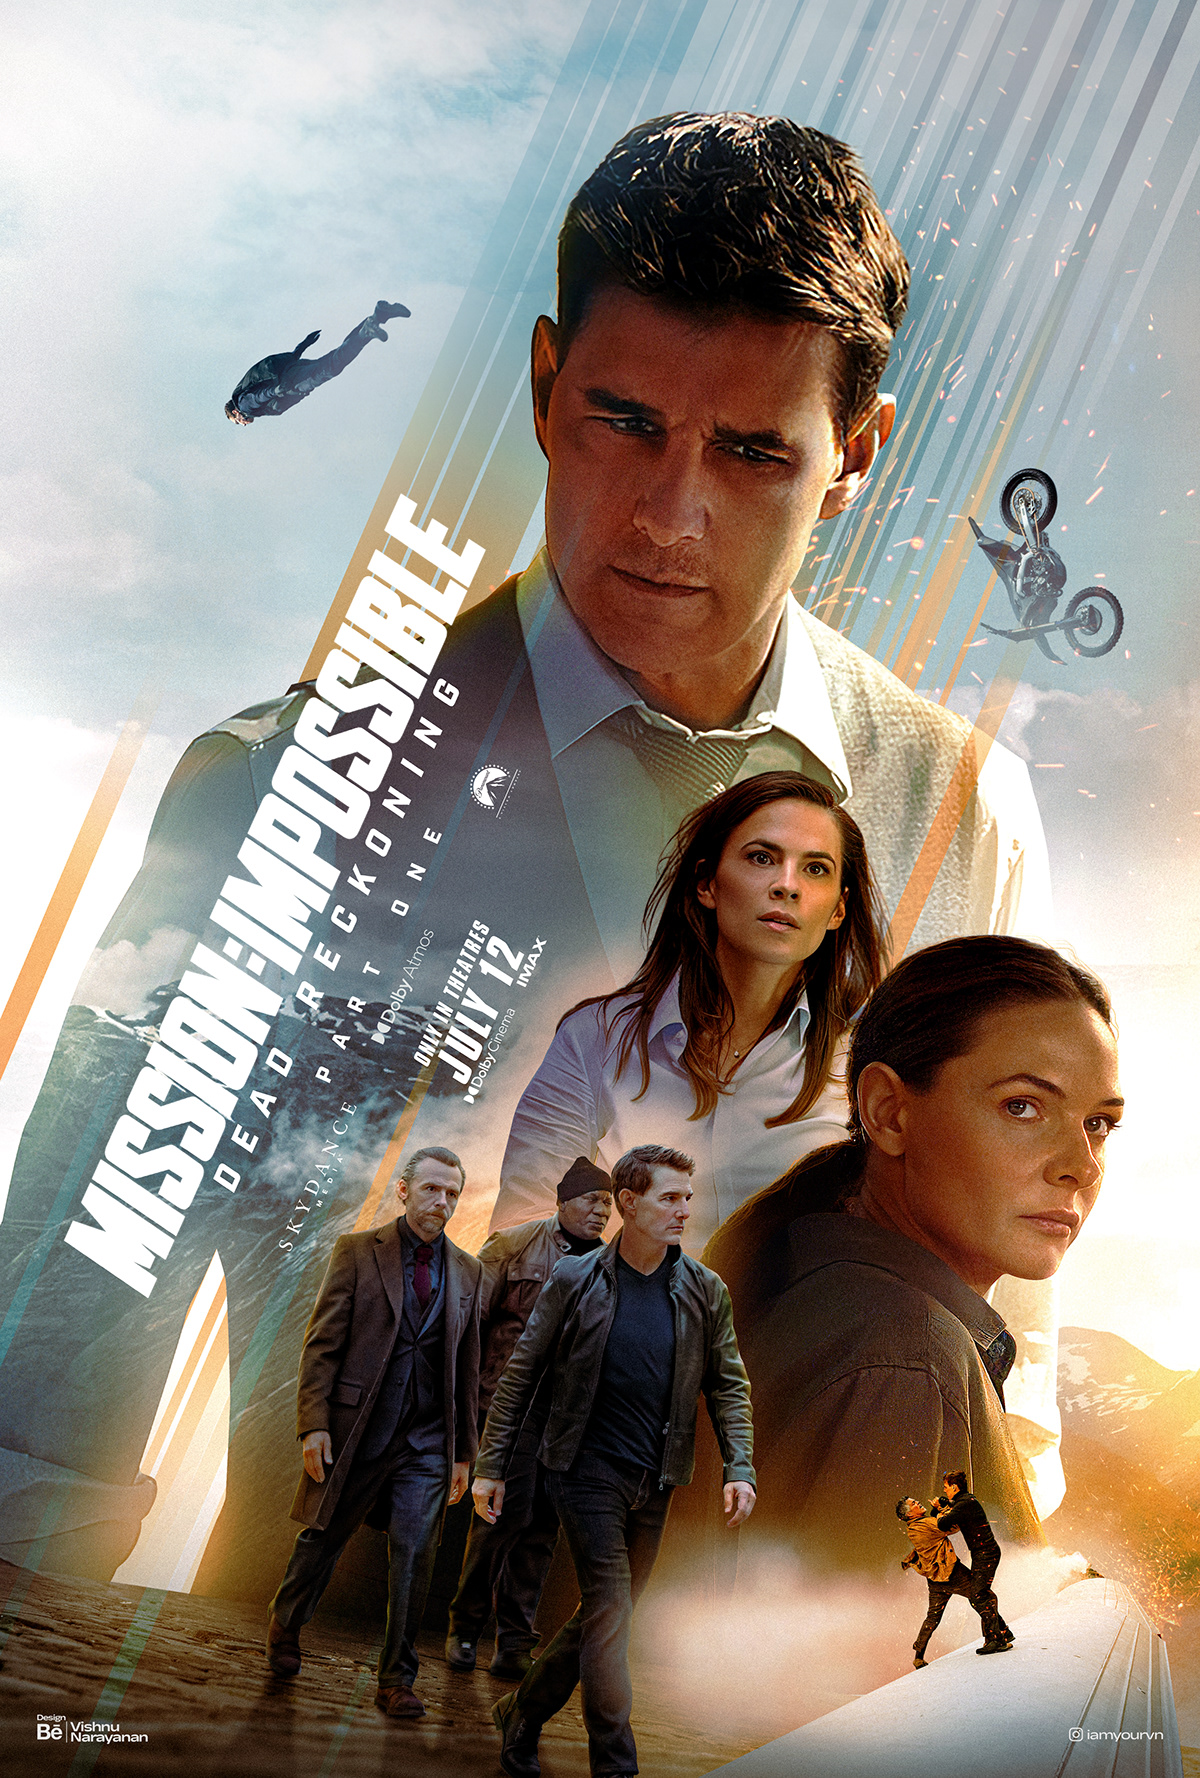 Mission Impossible missionimpossible Tom Cruise movie Poster Design key art movie poster Cinema Vishnu Narayanan